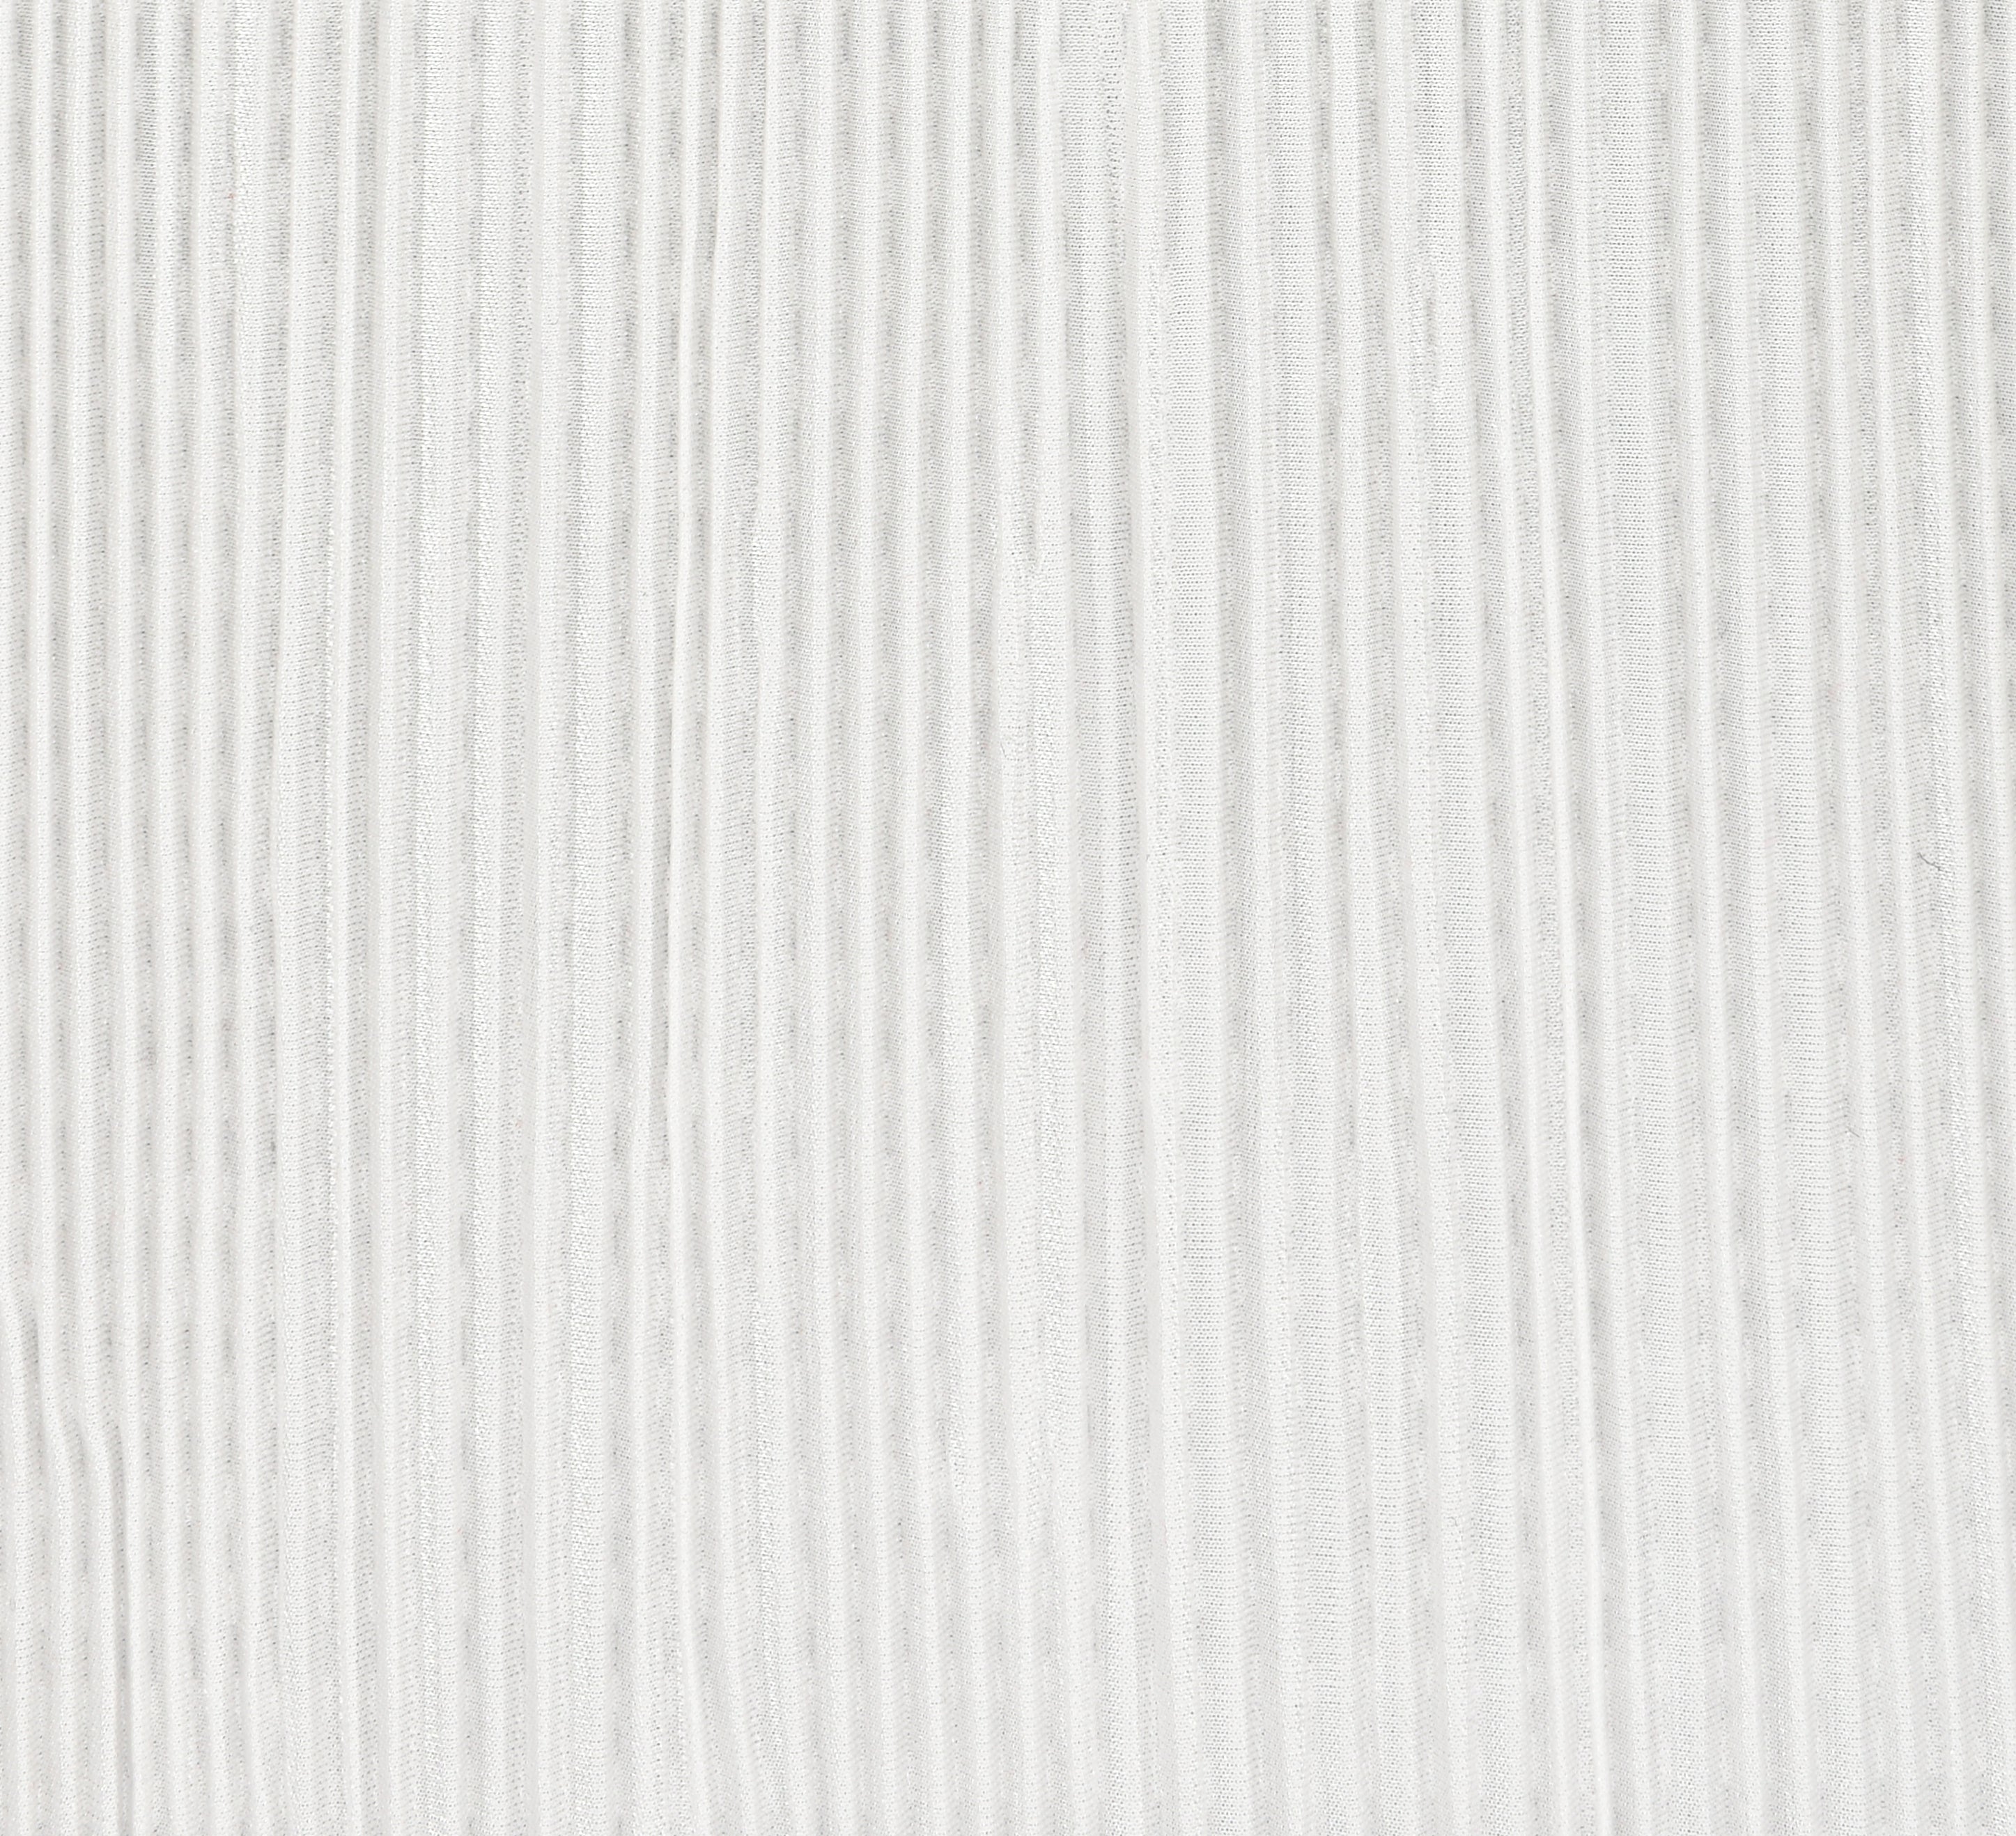 9761-06 Snow White Polyester Pleat Plain Dyed 100% 180g/yd 56&quot; knit plain dyed pleat polyester white Solid Color, Pleat - knit fabric - woven fabric - fabric company - fabric wholesale - fabric b2b - fabric factory - high quality fabric - hong kong fabric - fabric hk - acetate fabric - cotton fabric - linen fabric - metallic fabric - nylon fabric - polyester fabric - spandex fabric - chun wing hing - cwh hk - fabric worldwide ship - 針織布 - 梳織布 - 布料公司- 布料批發 - 香港布料 - 秦榮興